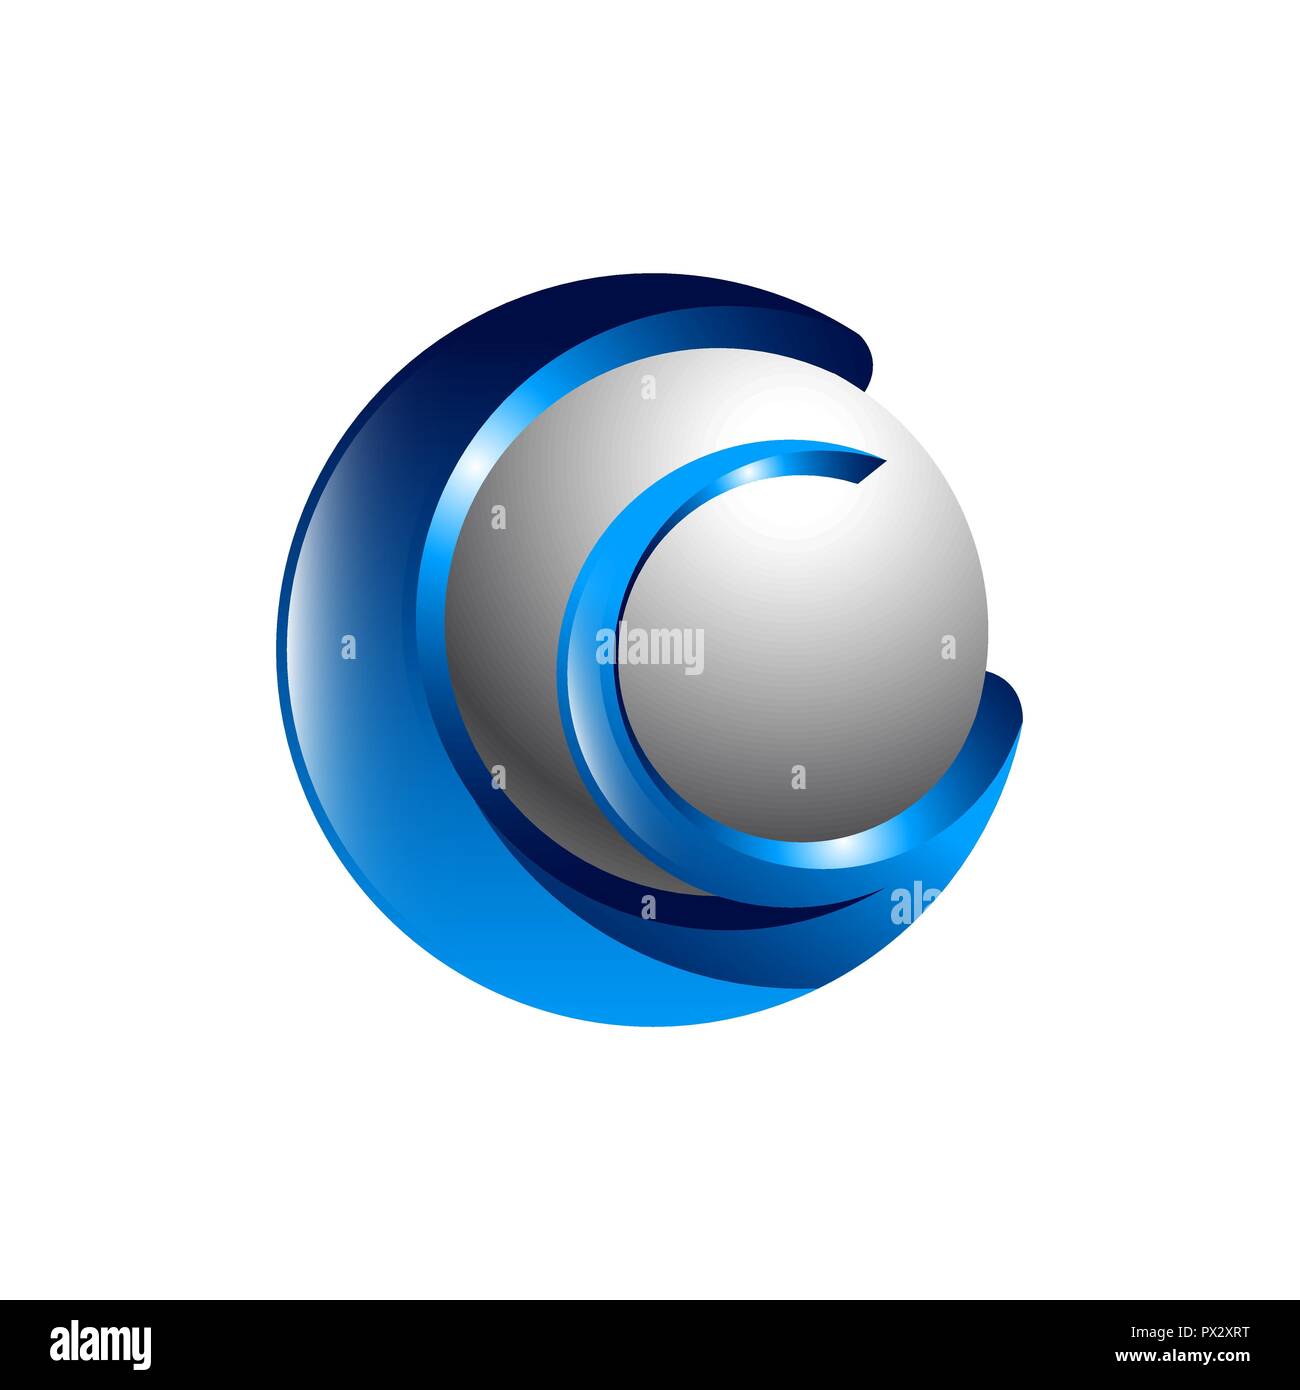 Creative abstract 3d sphere vector logo design template element. Colored silver blue concept icon Stock Vector